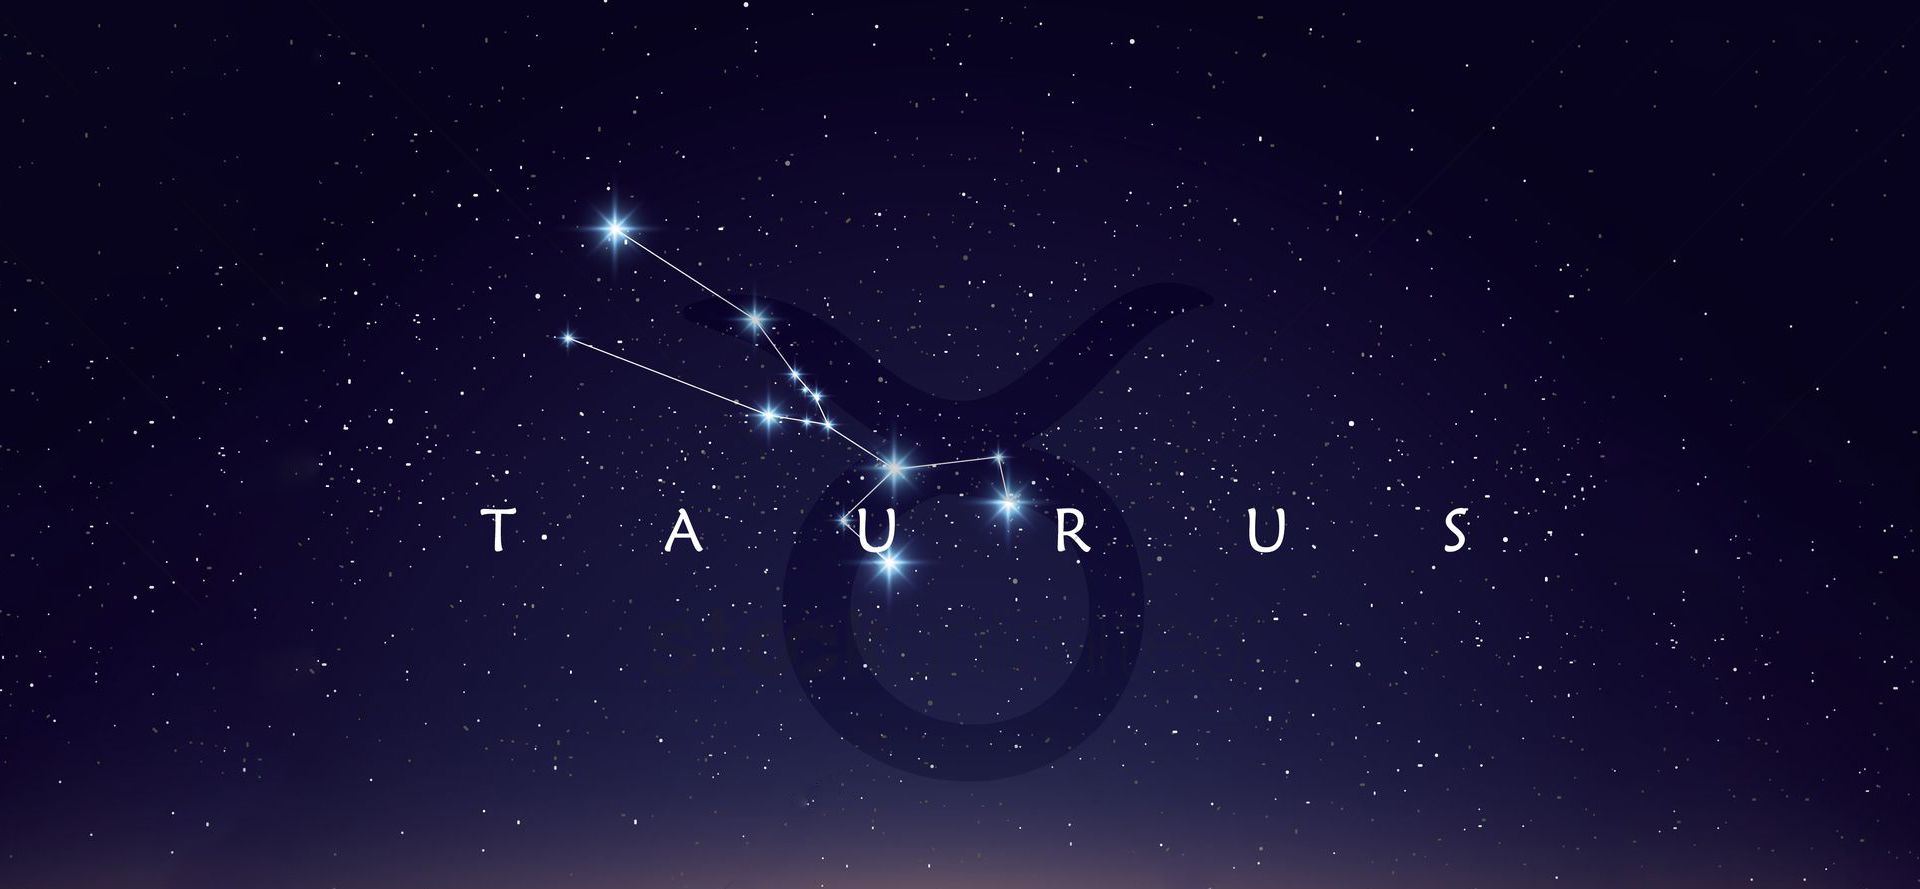 Taurus constellation.